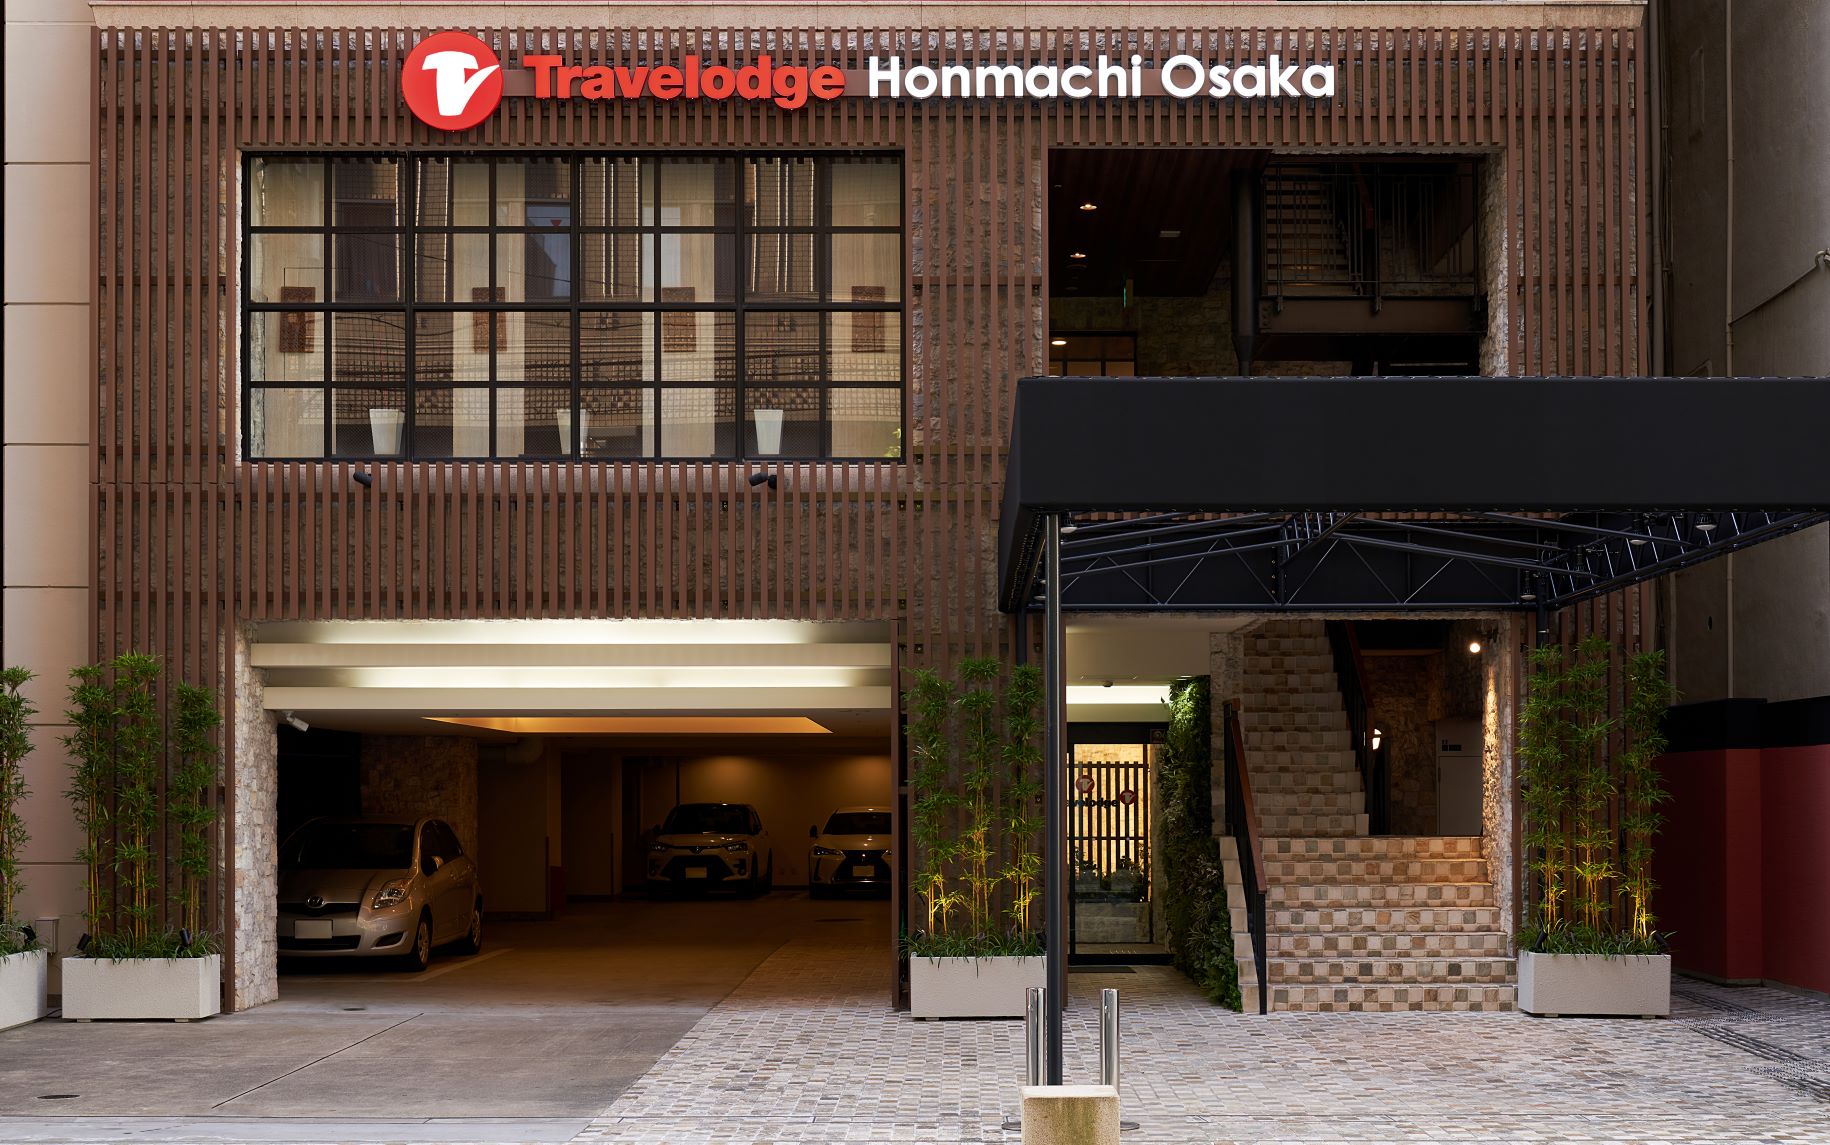 Travelodge Honmachi Osaka Opens Its Door on September 28